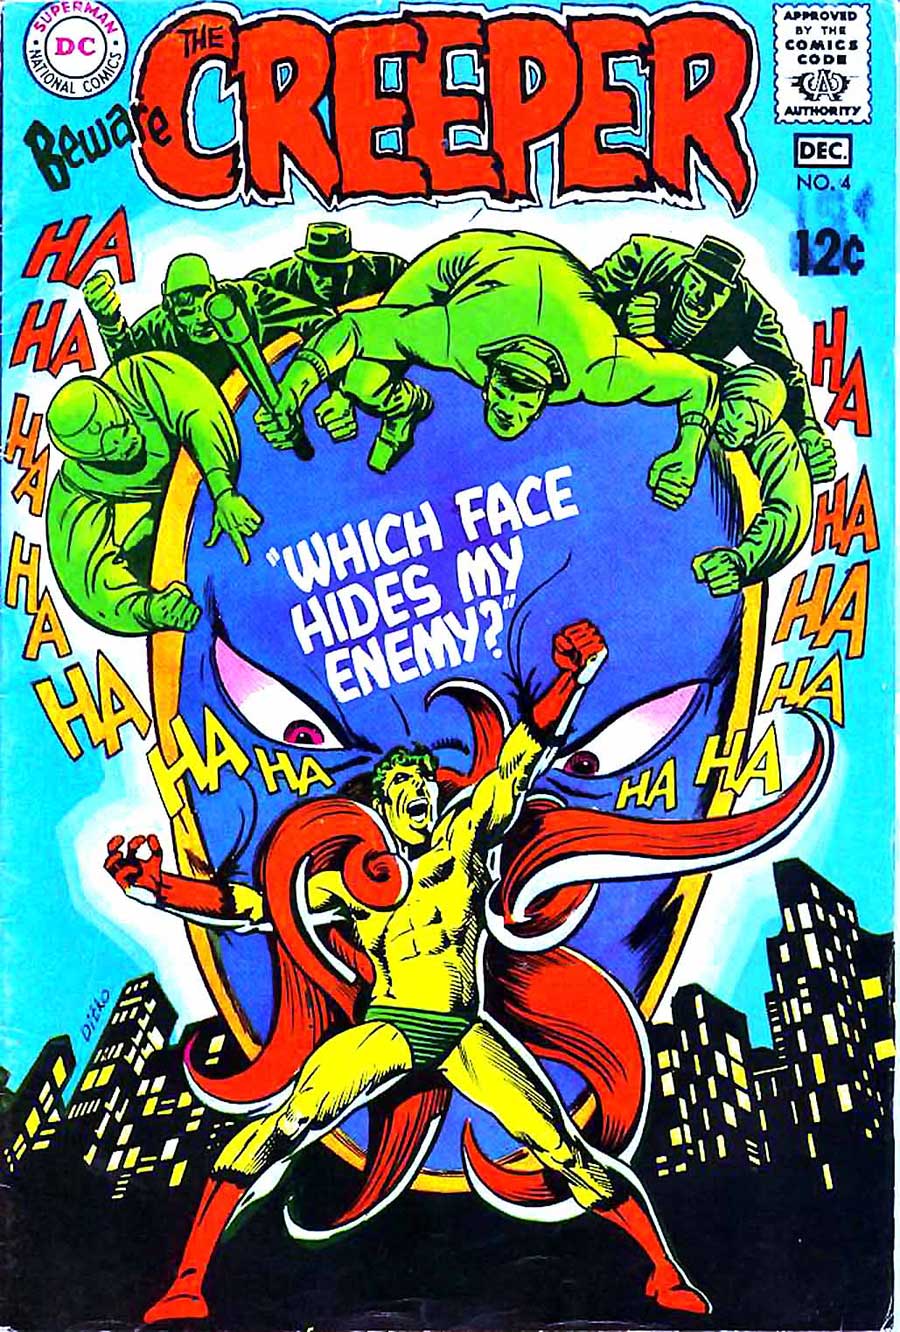 Beware the Creeper v1 #4 dc 1960s silver age comic book cover art by Steve Ditko